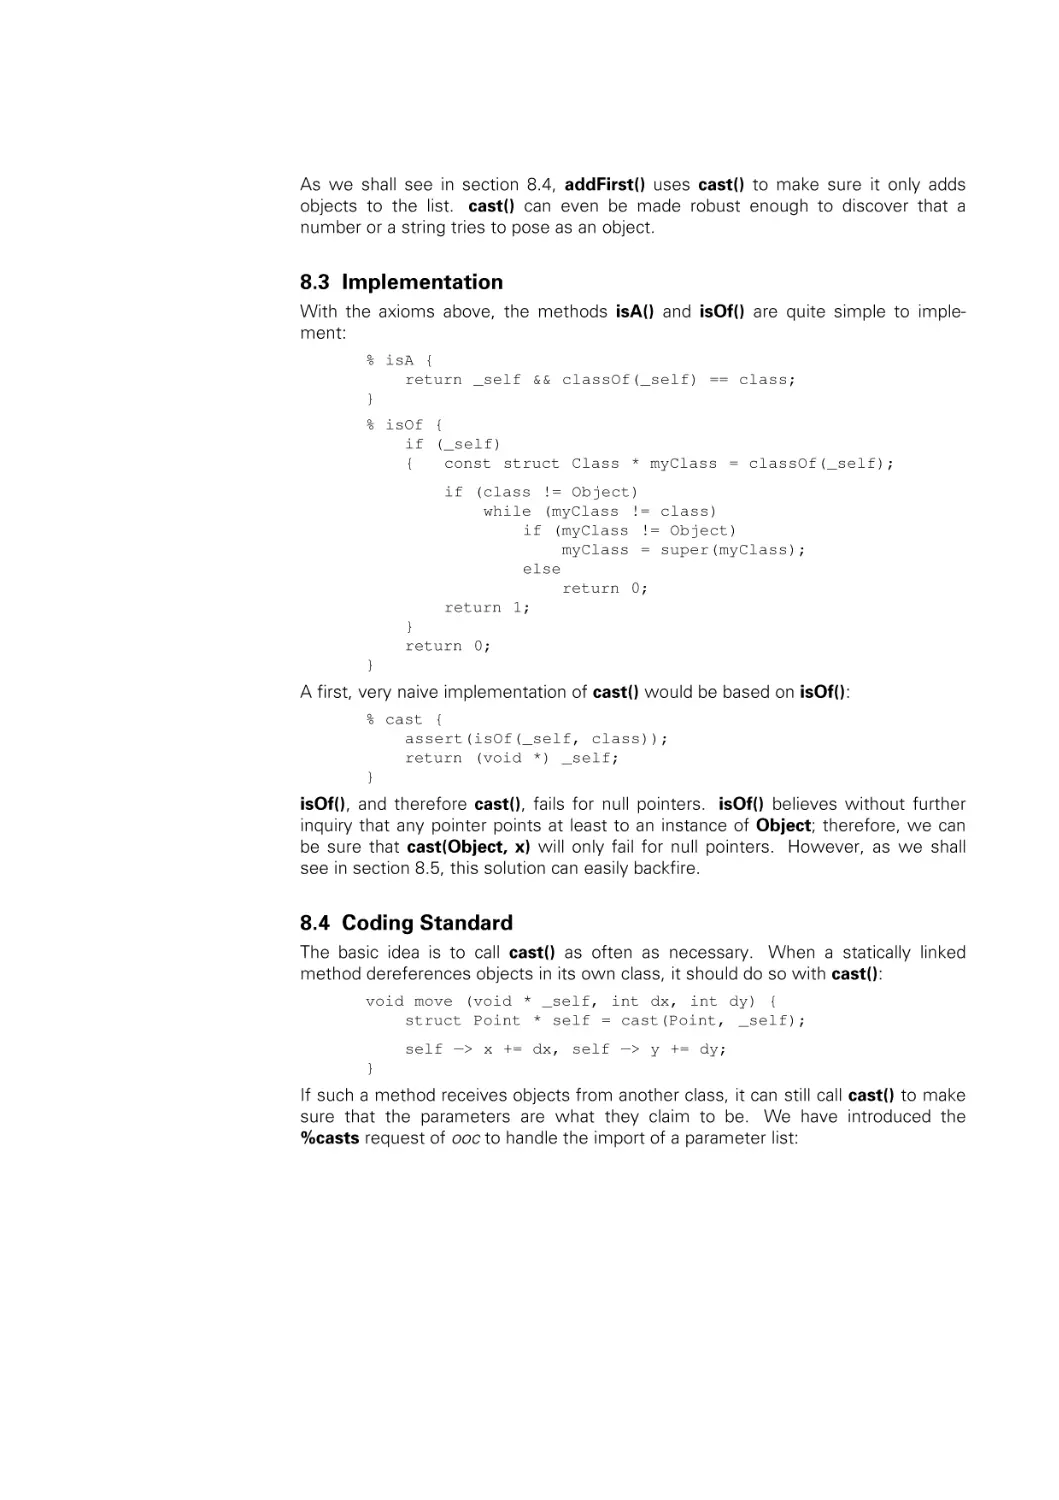 Implementation
Coding Standard